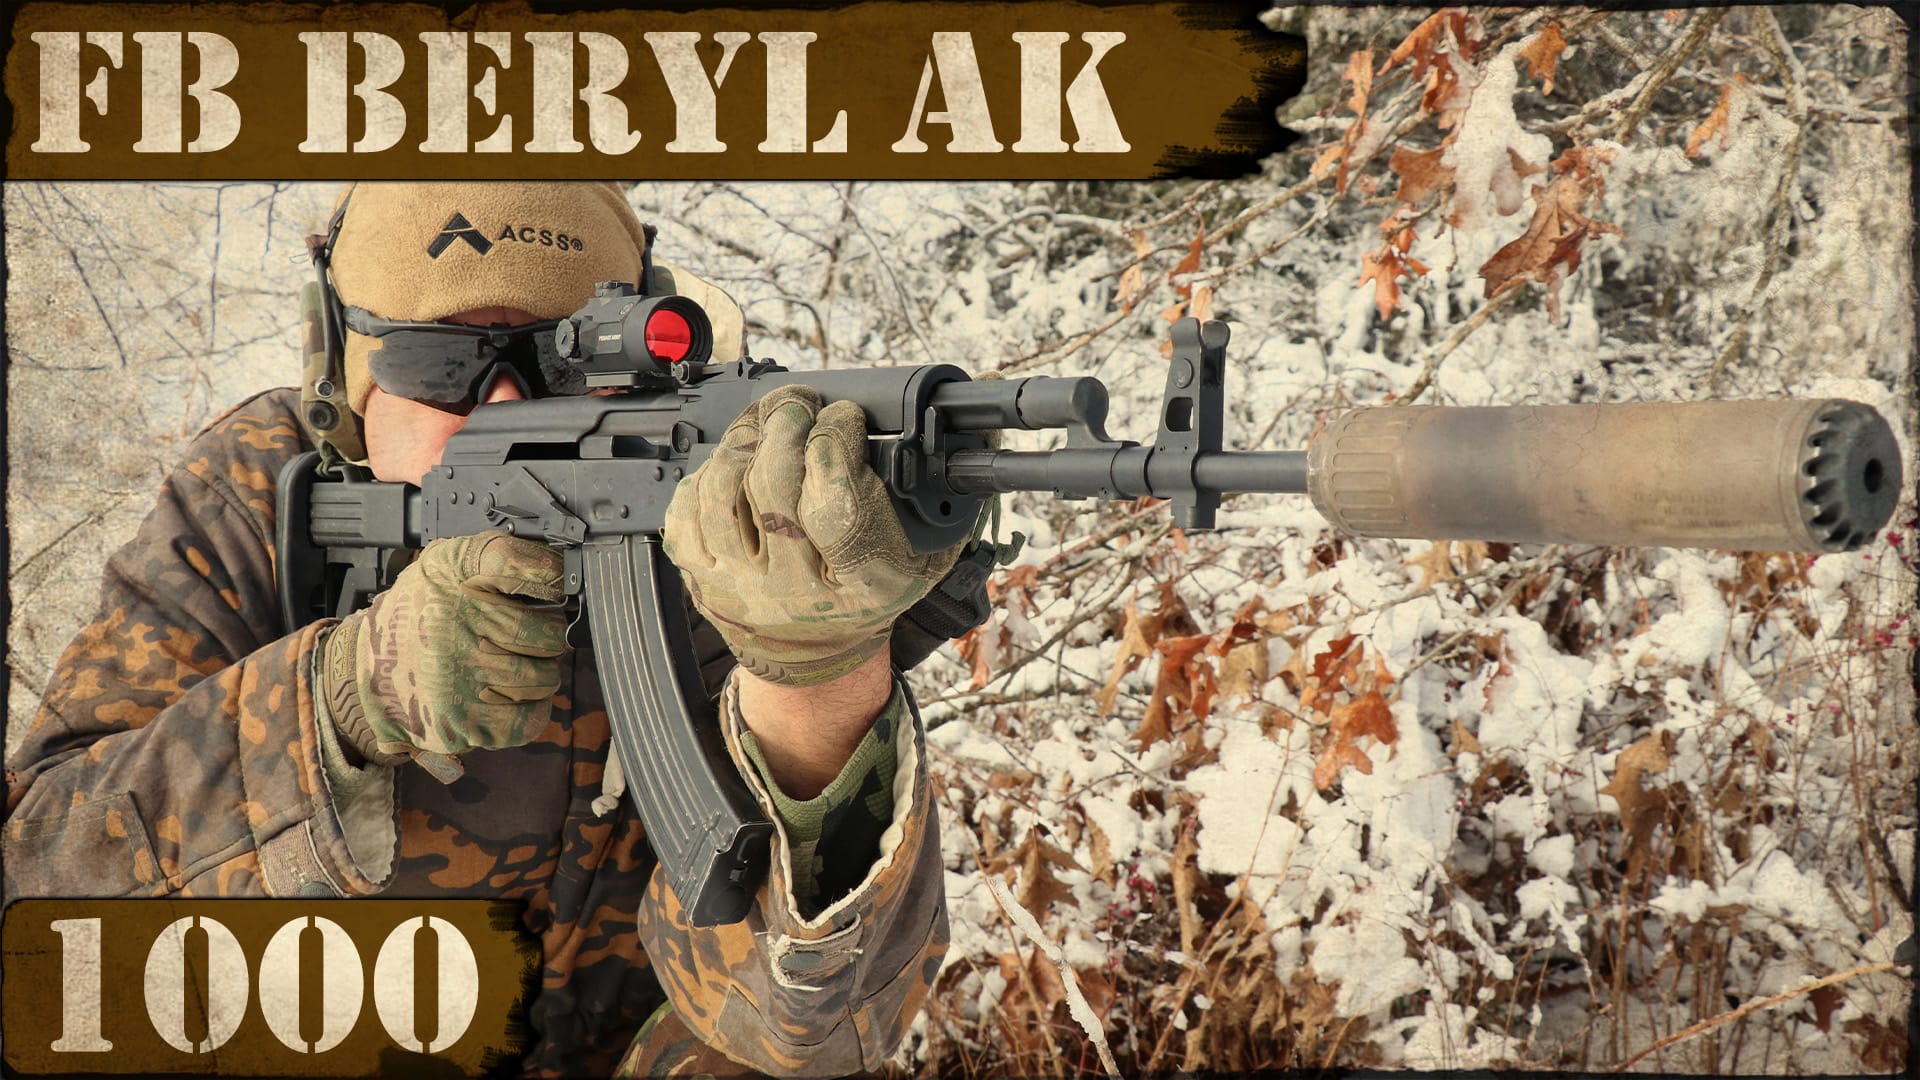 FB Beryl AK – 1000 shots! Winter is here?